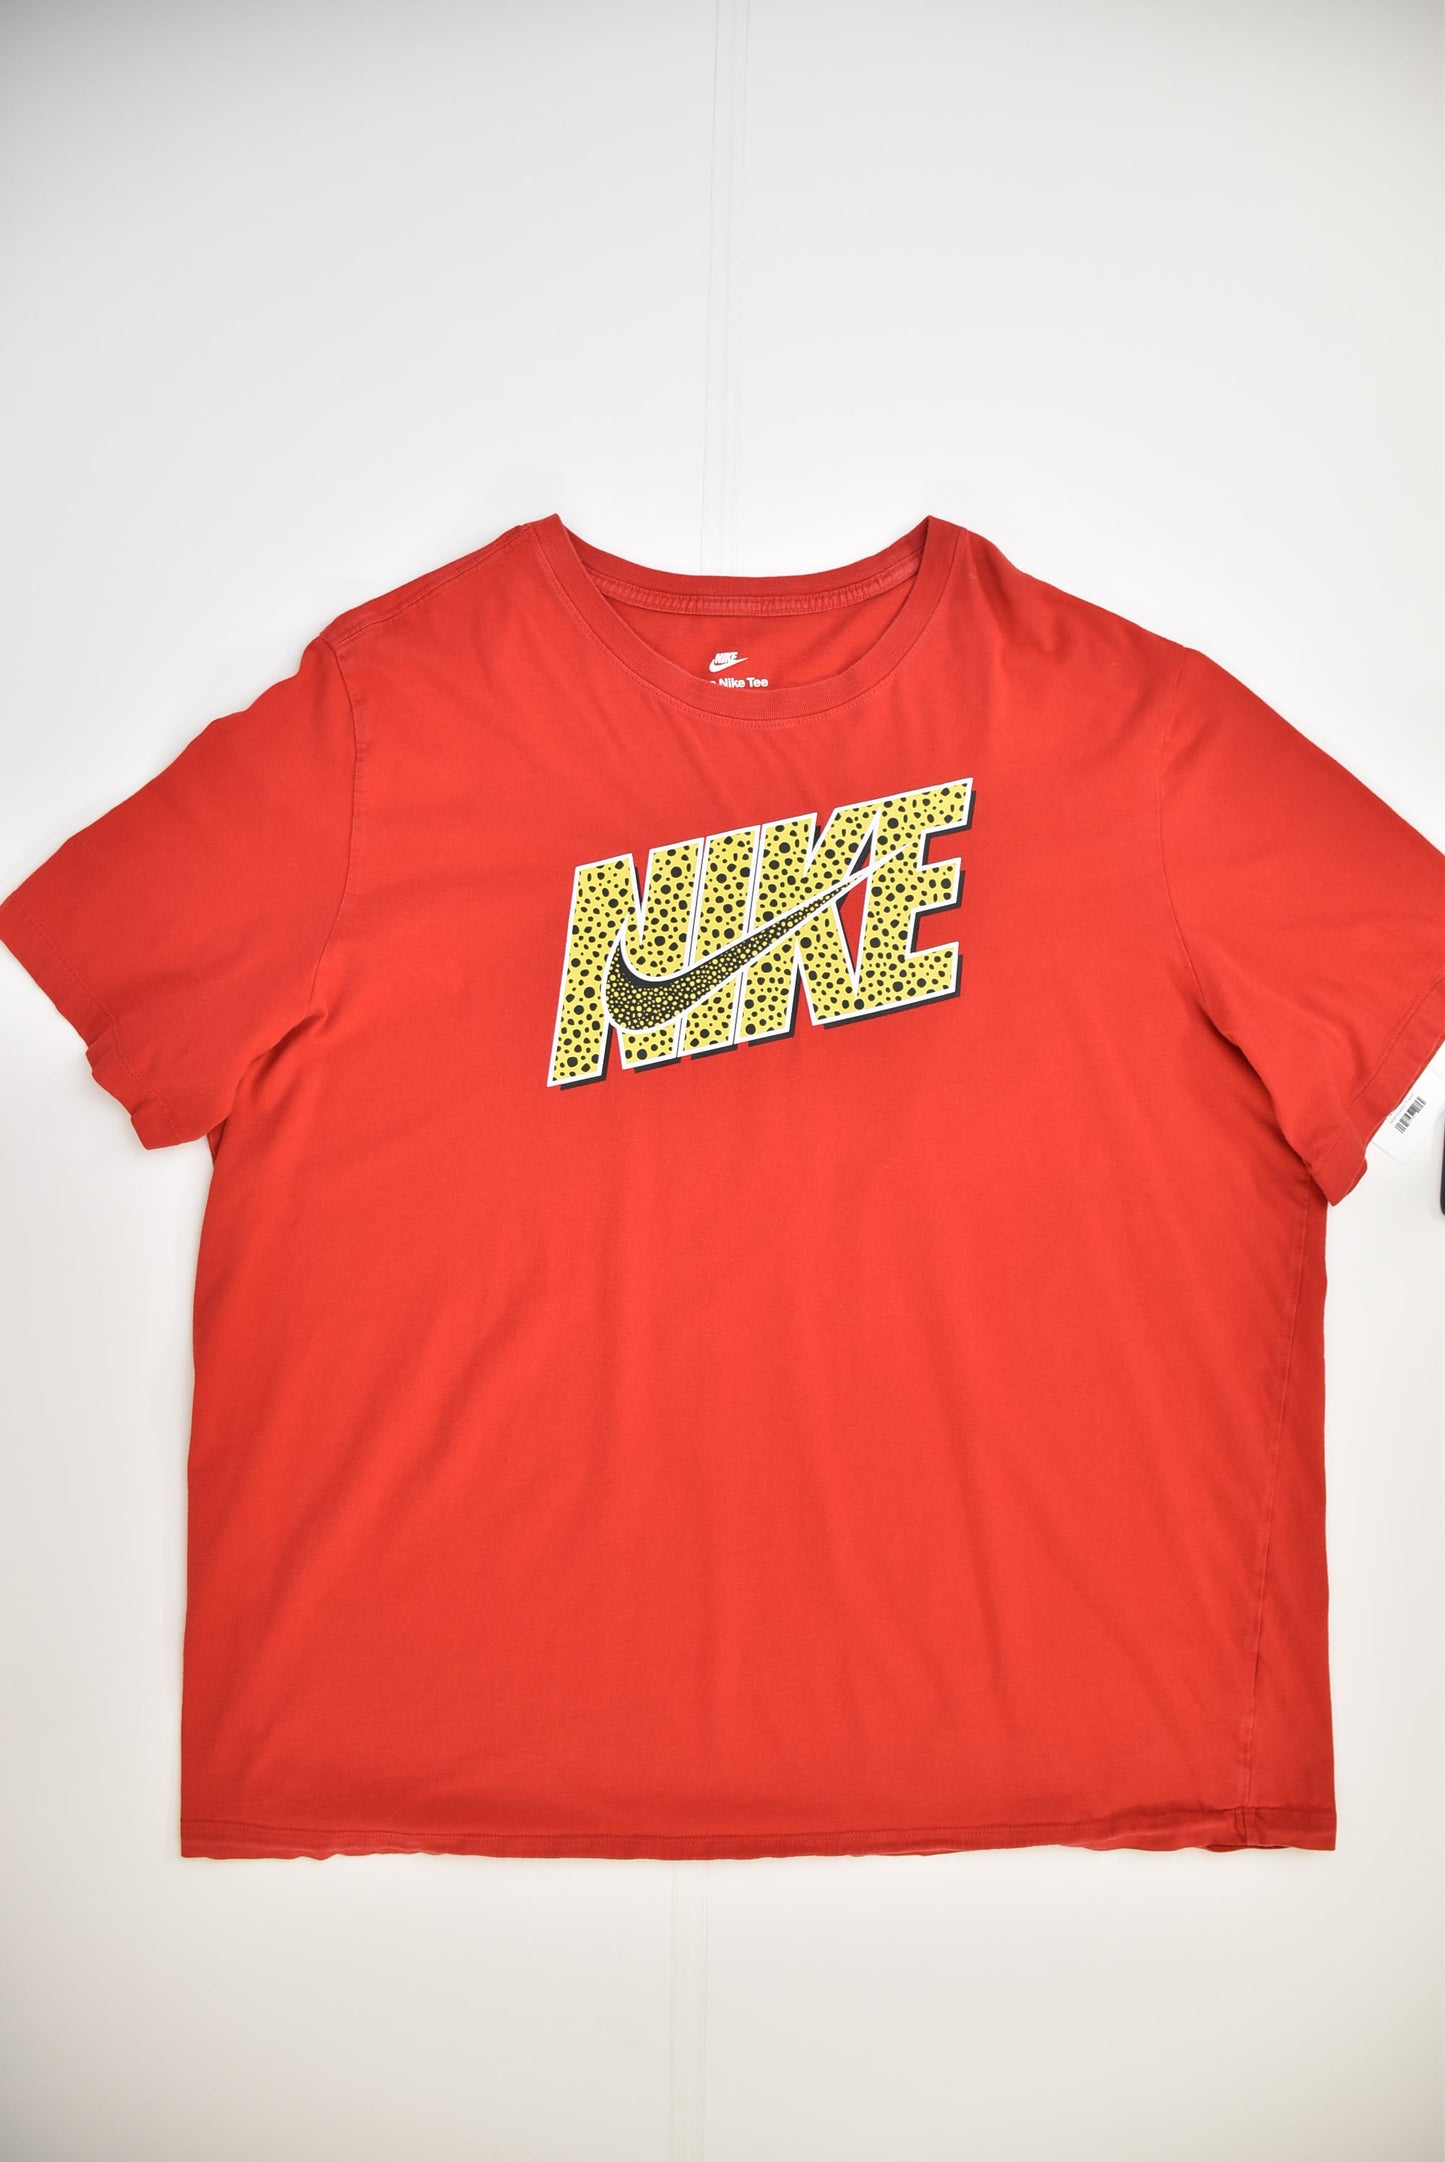 Nike Graphic T-shirt (3XL)